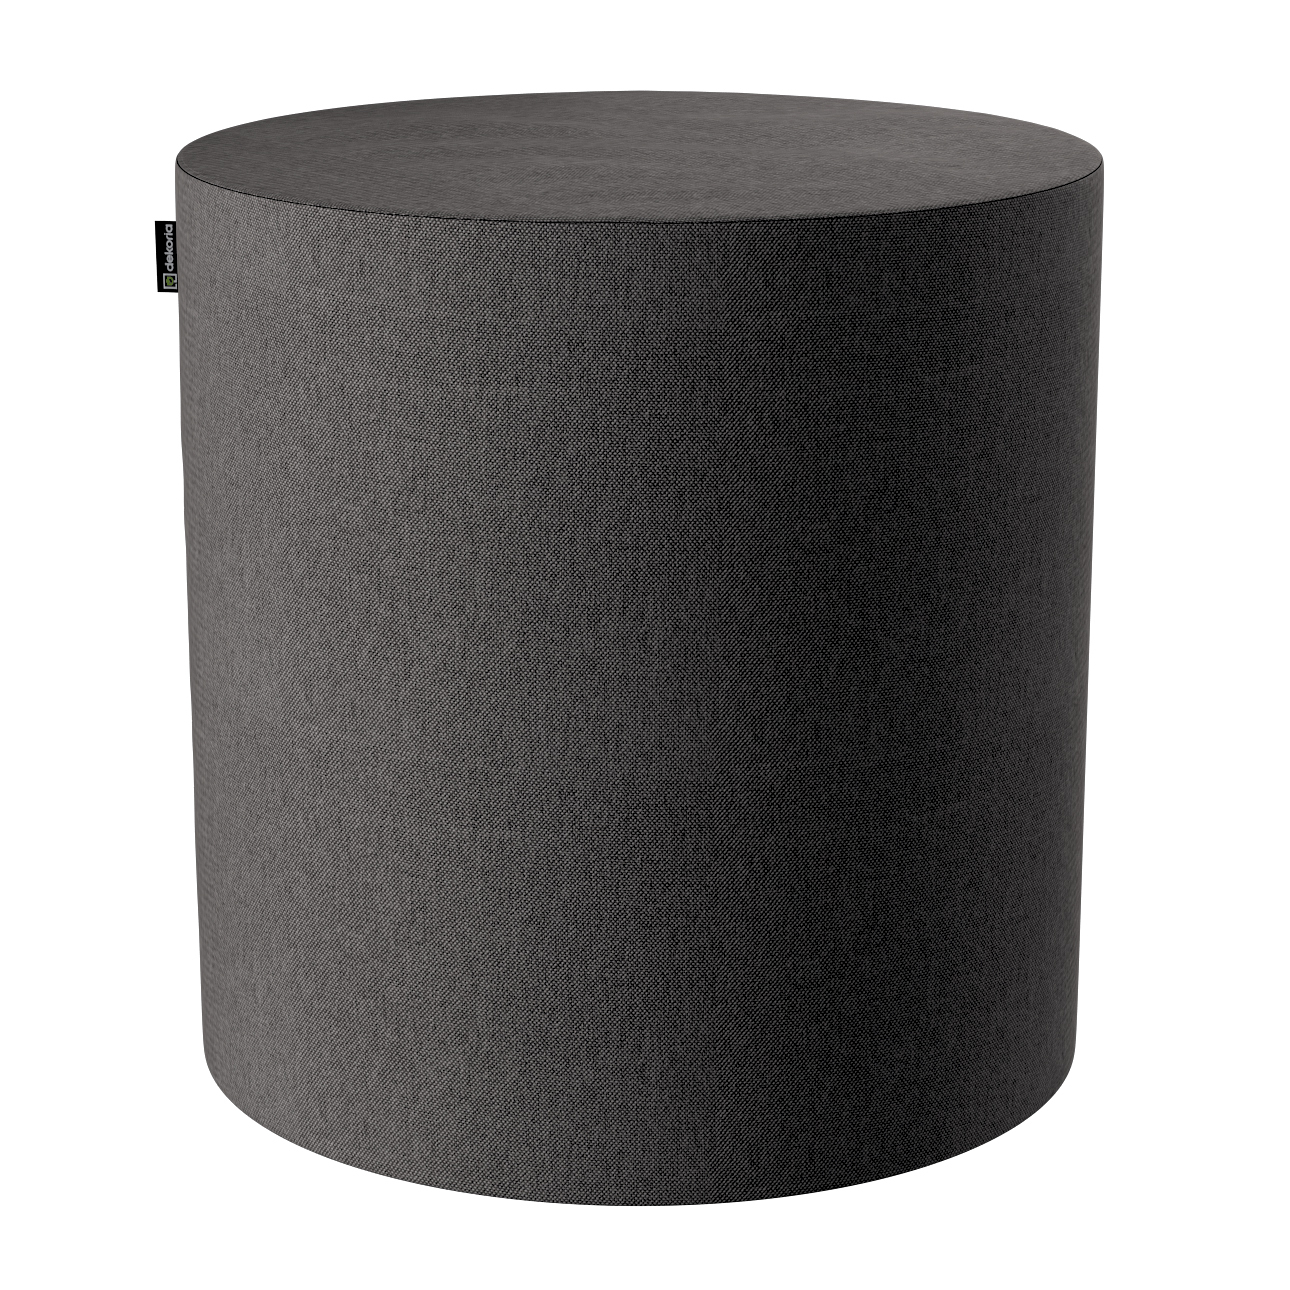 Pouf Barrel, dunkelgrau, ø40 cm x 40 cm, Etna (705-35) günstig online kaufen